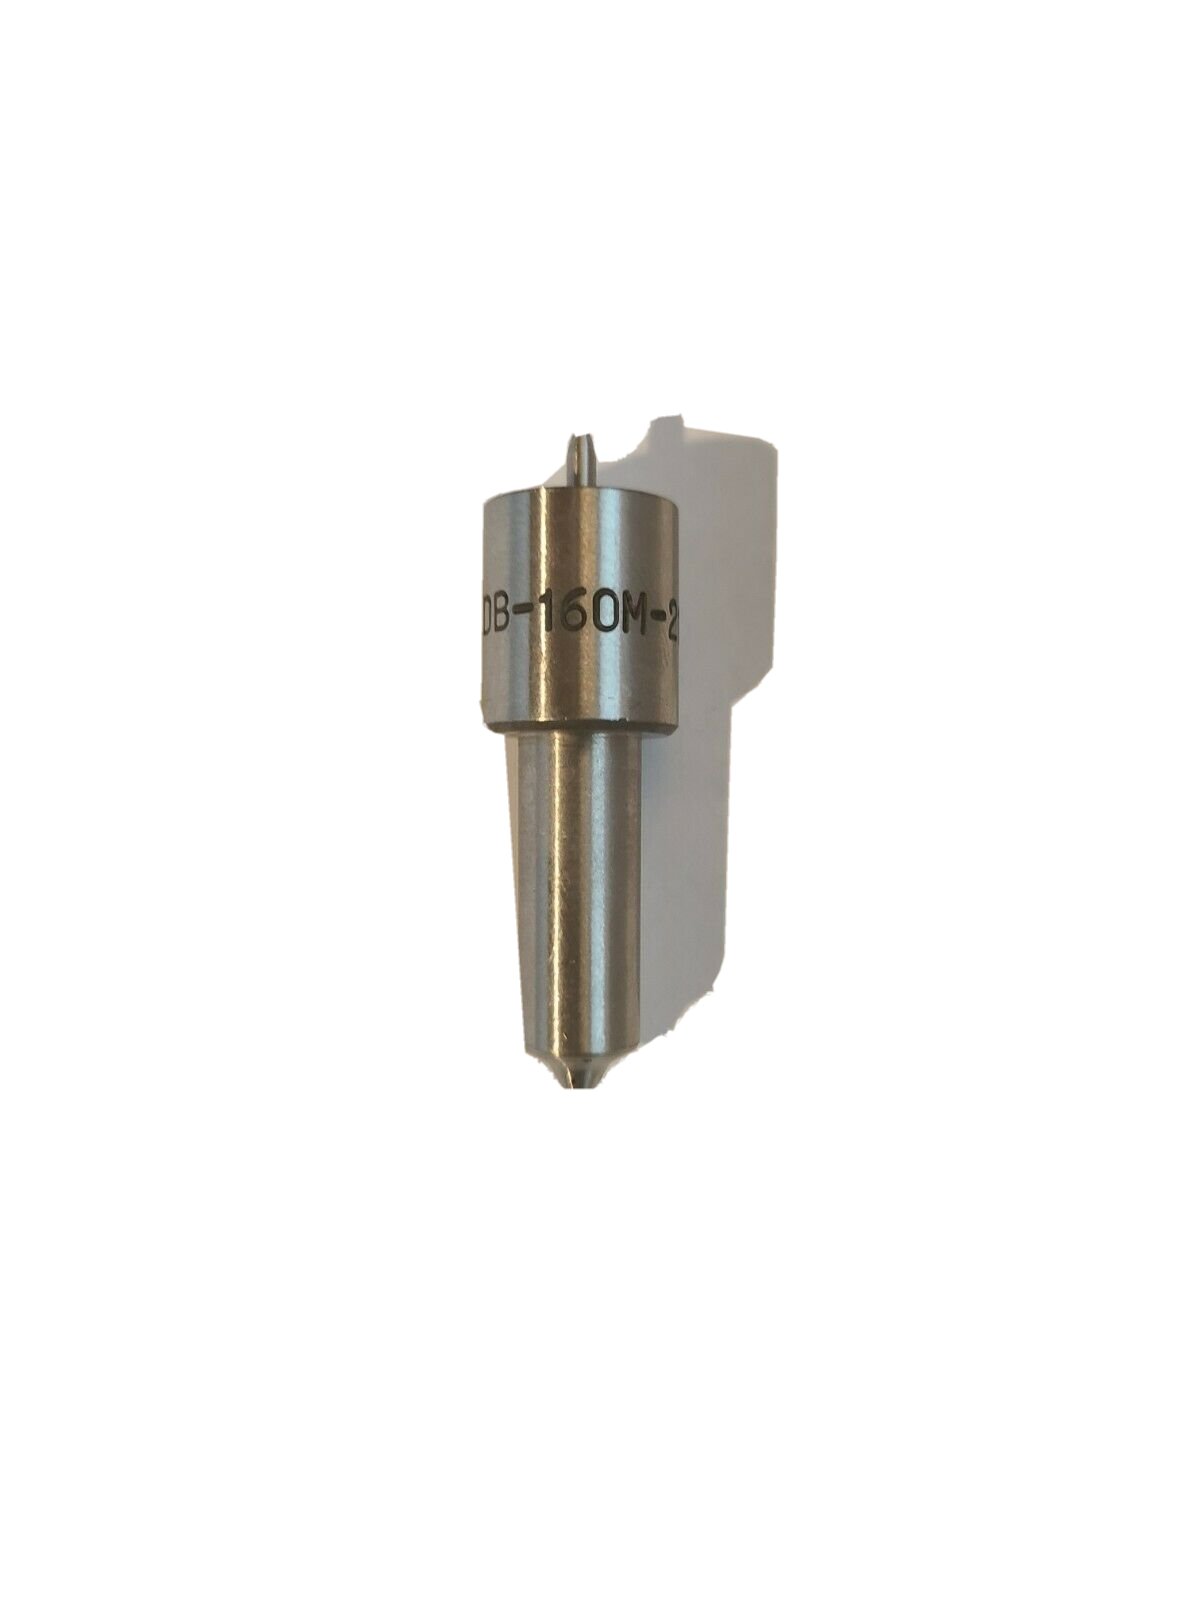 NBM770010  Diesel Fuel Injector Nozzle ADB-160-M-217-7